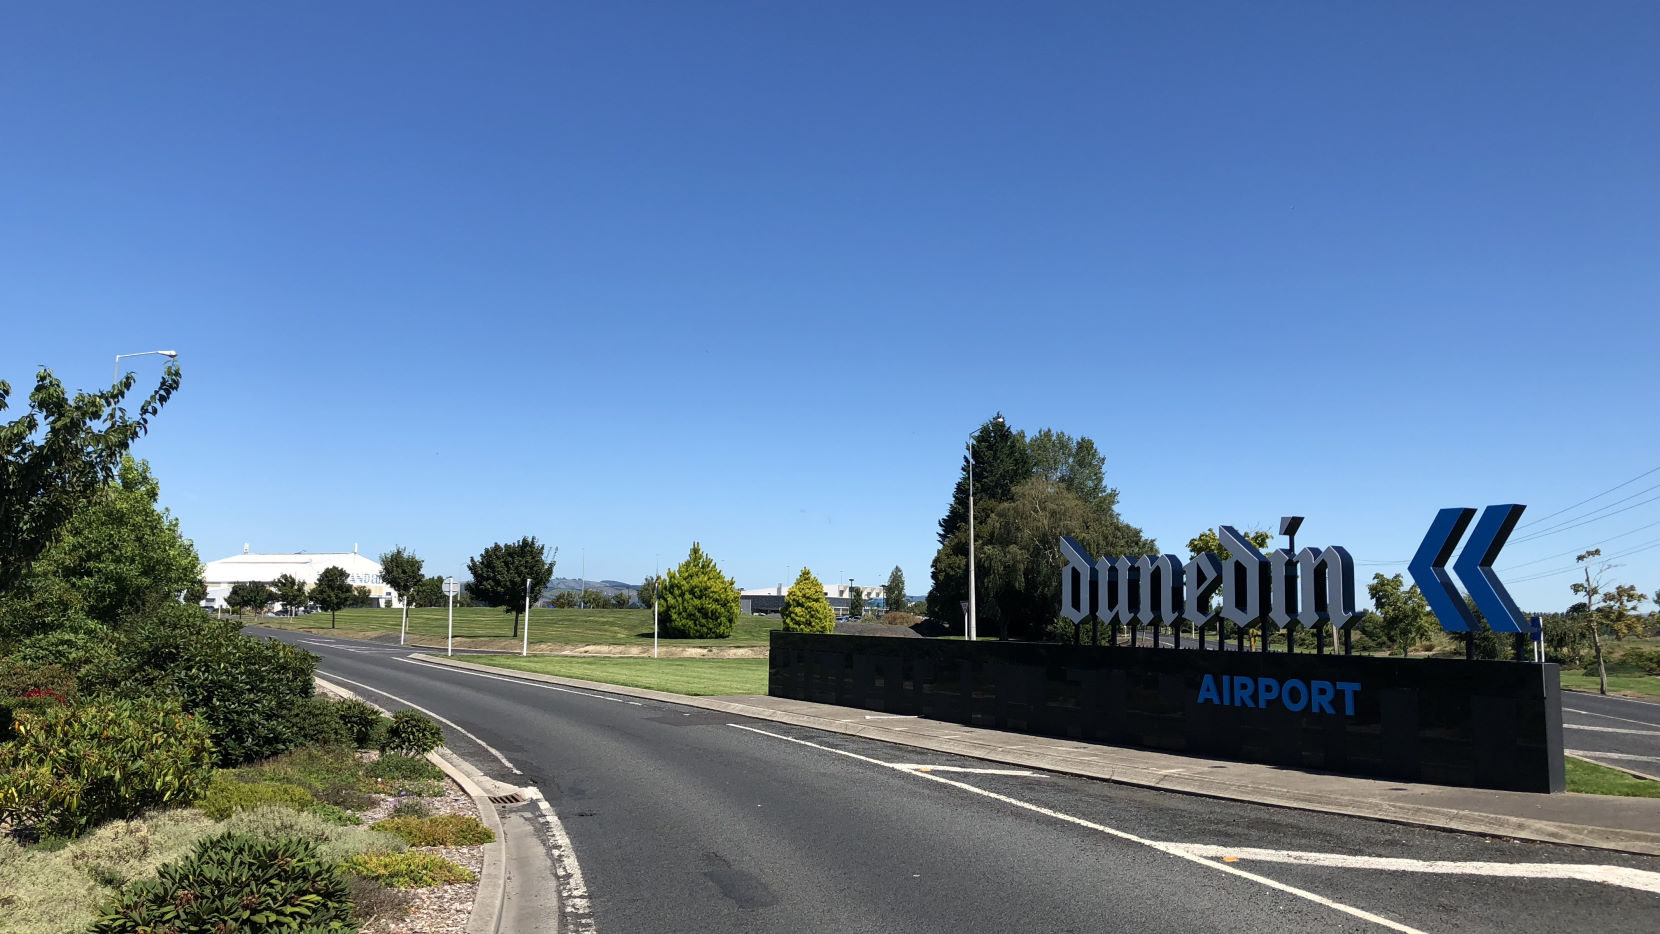 Dunedin Airport roadside entry sign.